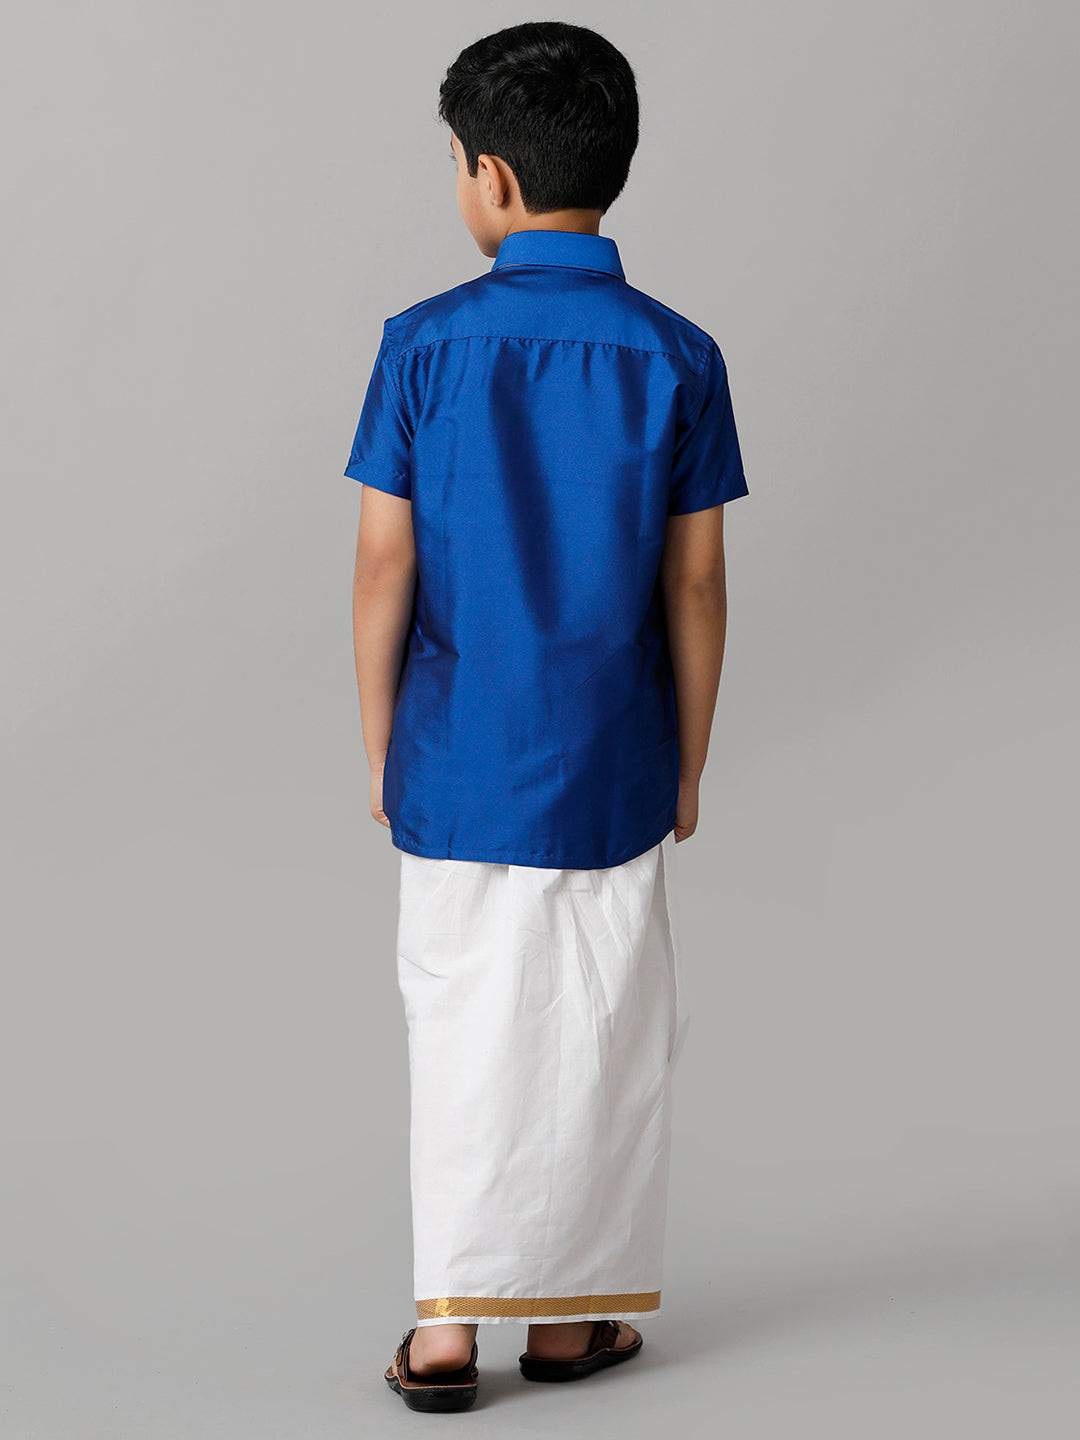 Boys Silk Cotton Light Blue Half Sleeves Shirt with Adjustable White Dhoti Combo K5-Back view